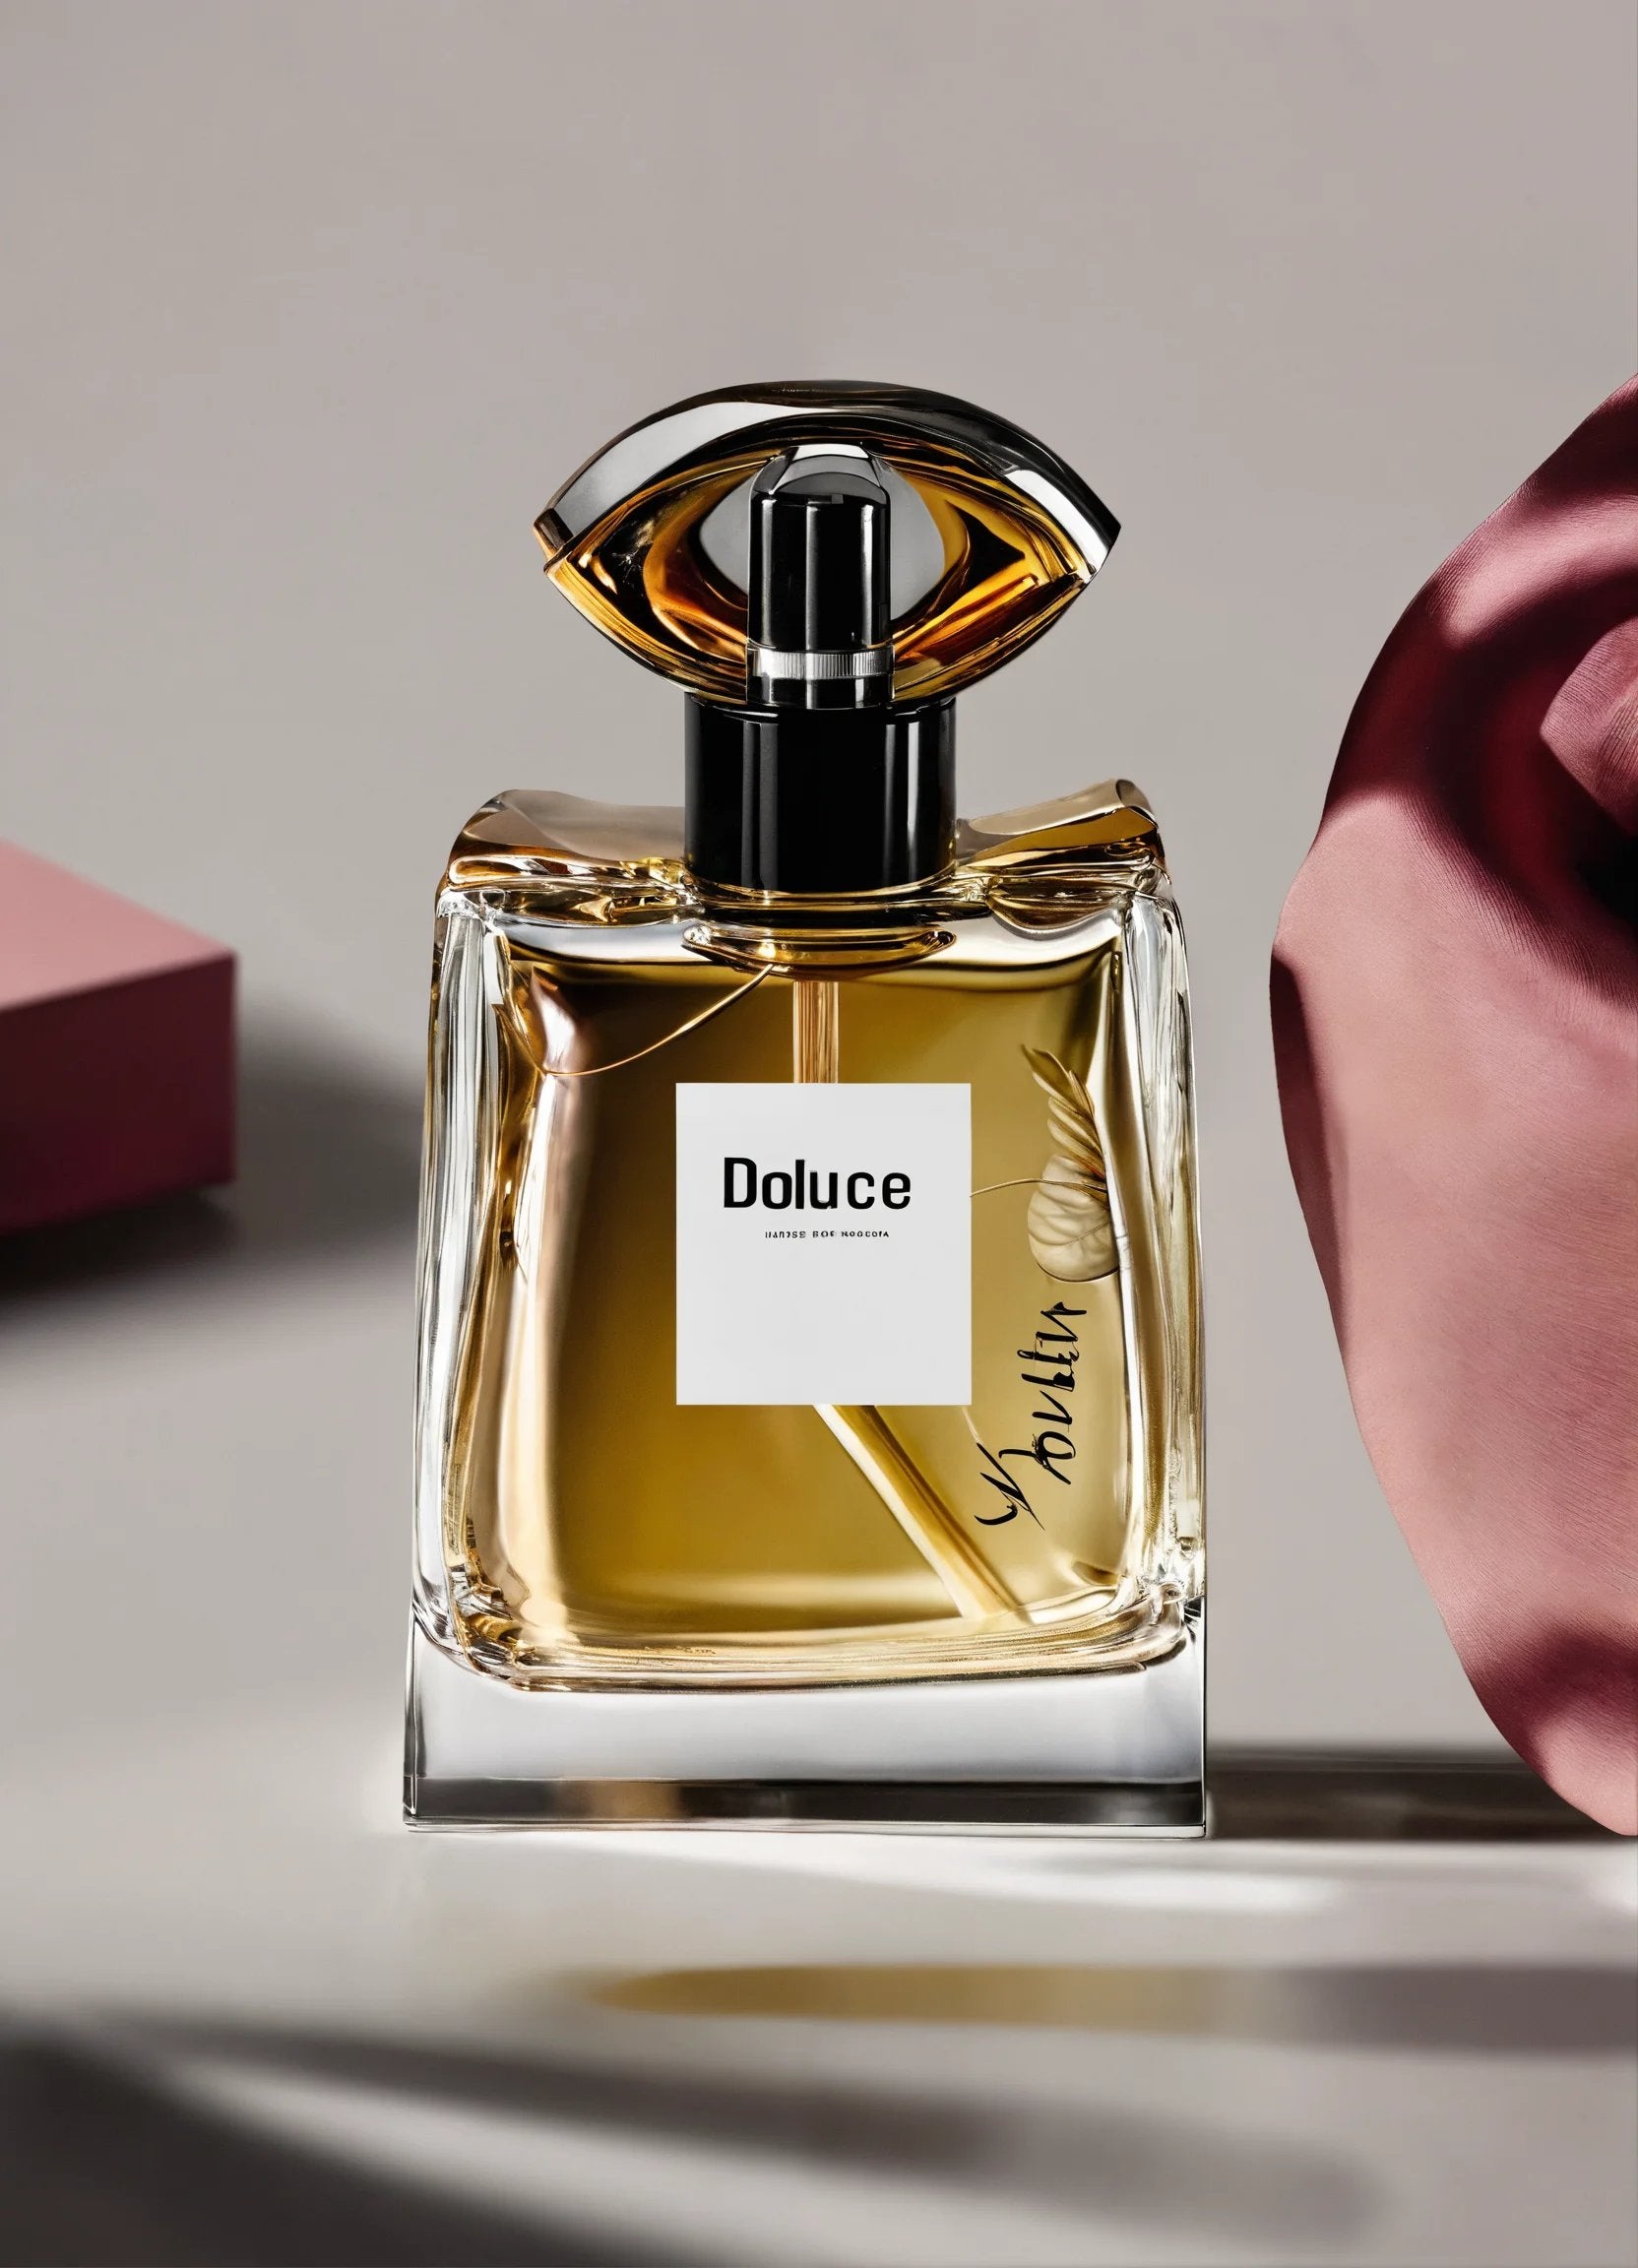 Dolruce fragrance